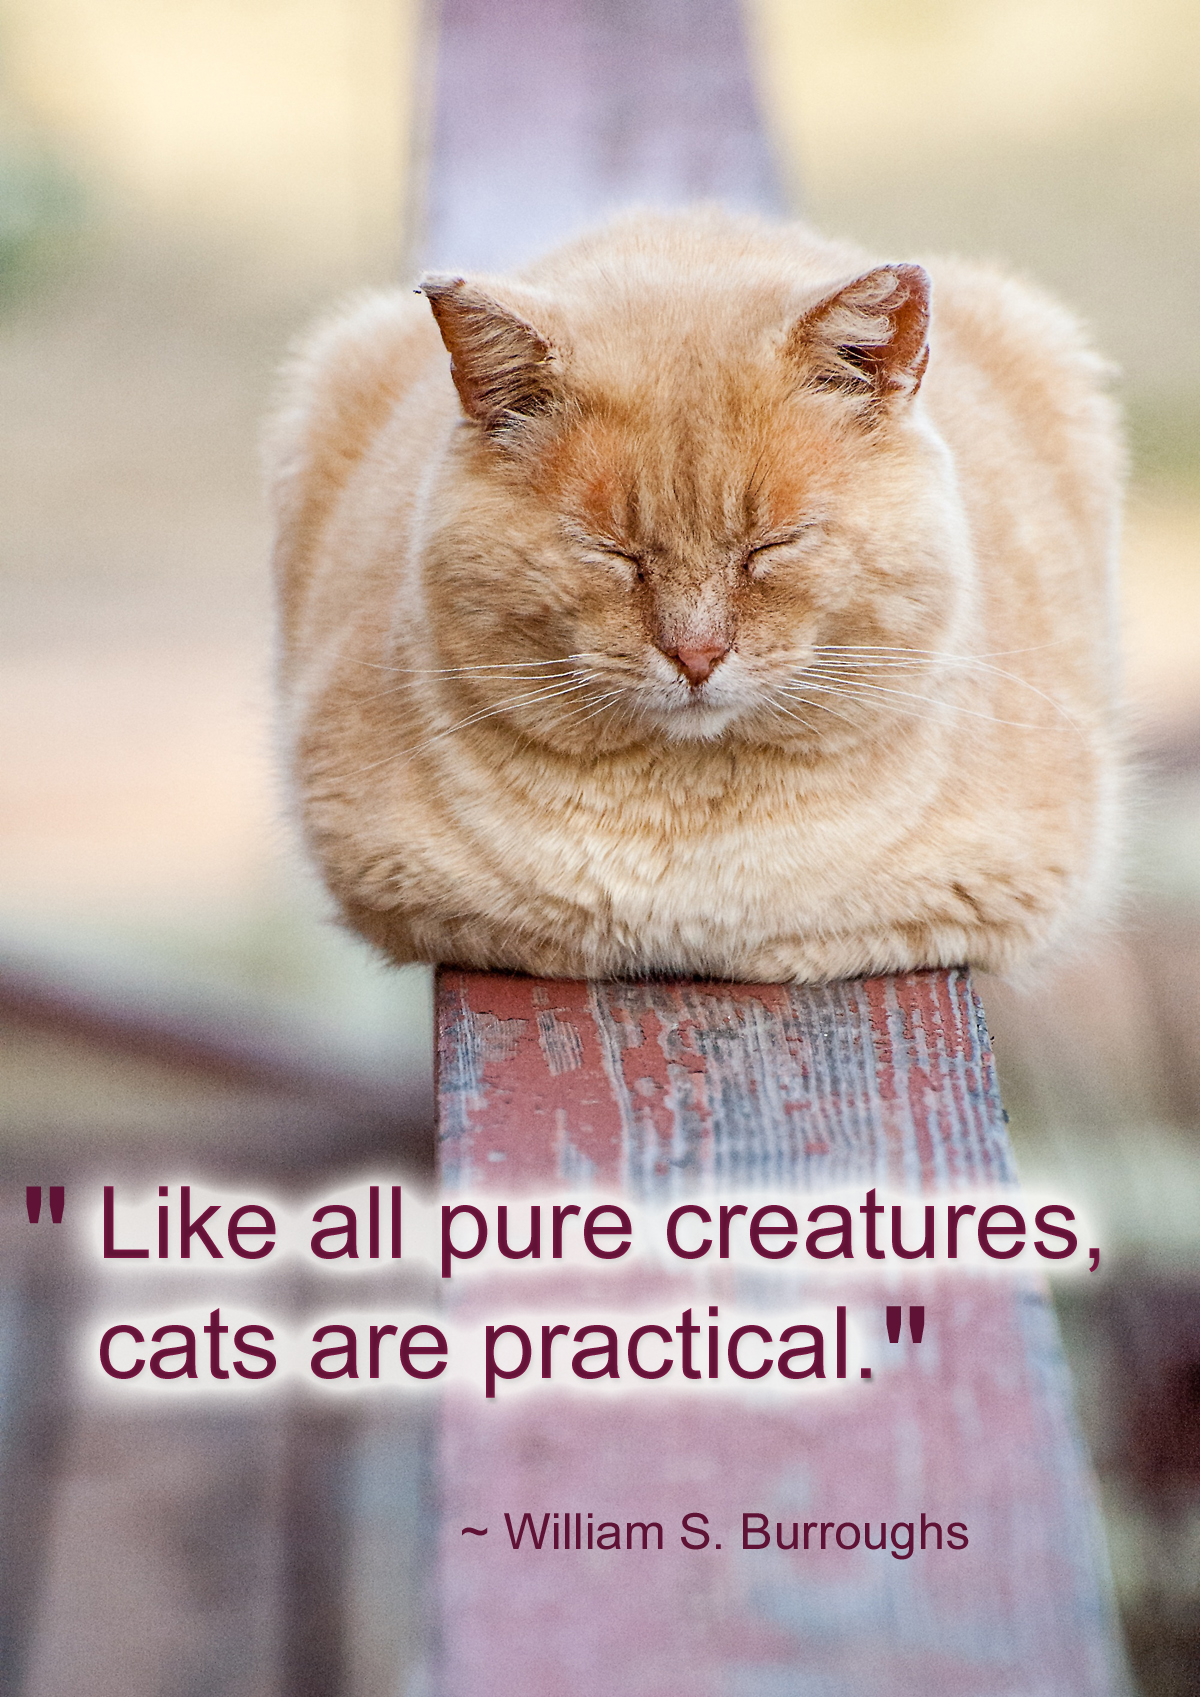 Cats are Practical - William S. Burroughs